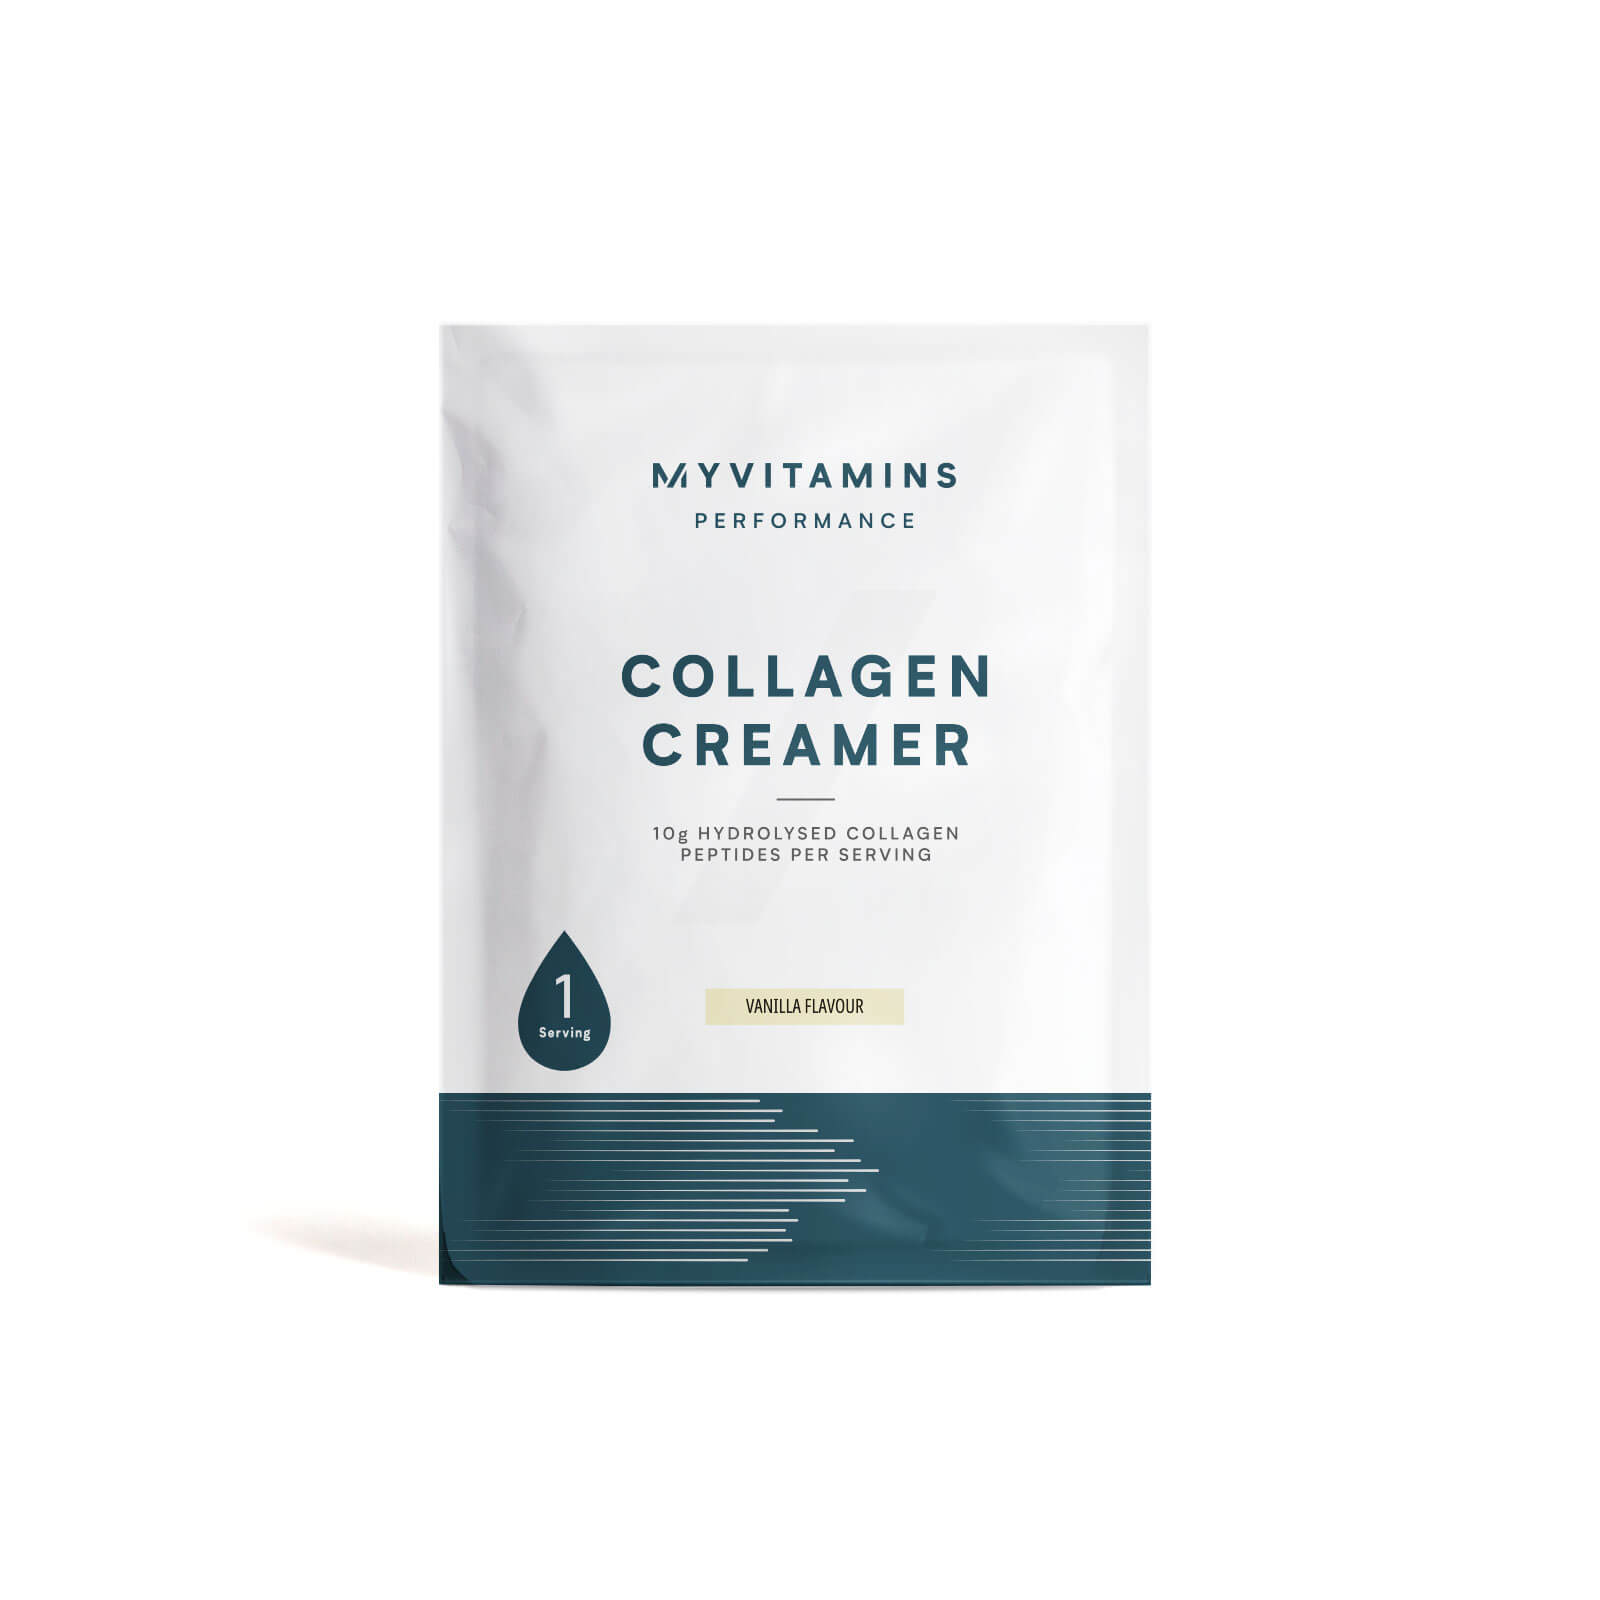 Collagen Creamer (Sample) - 14g - Vanilla